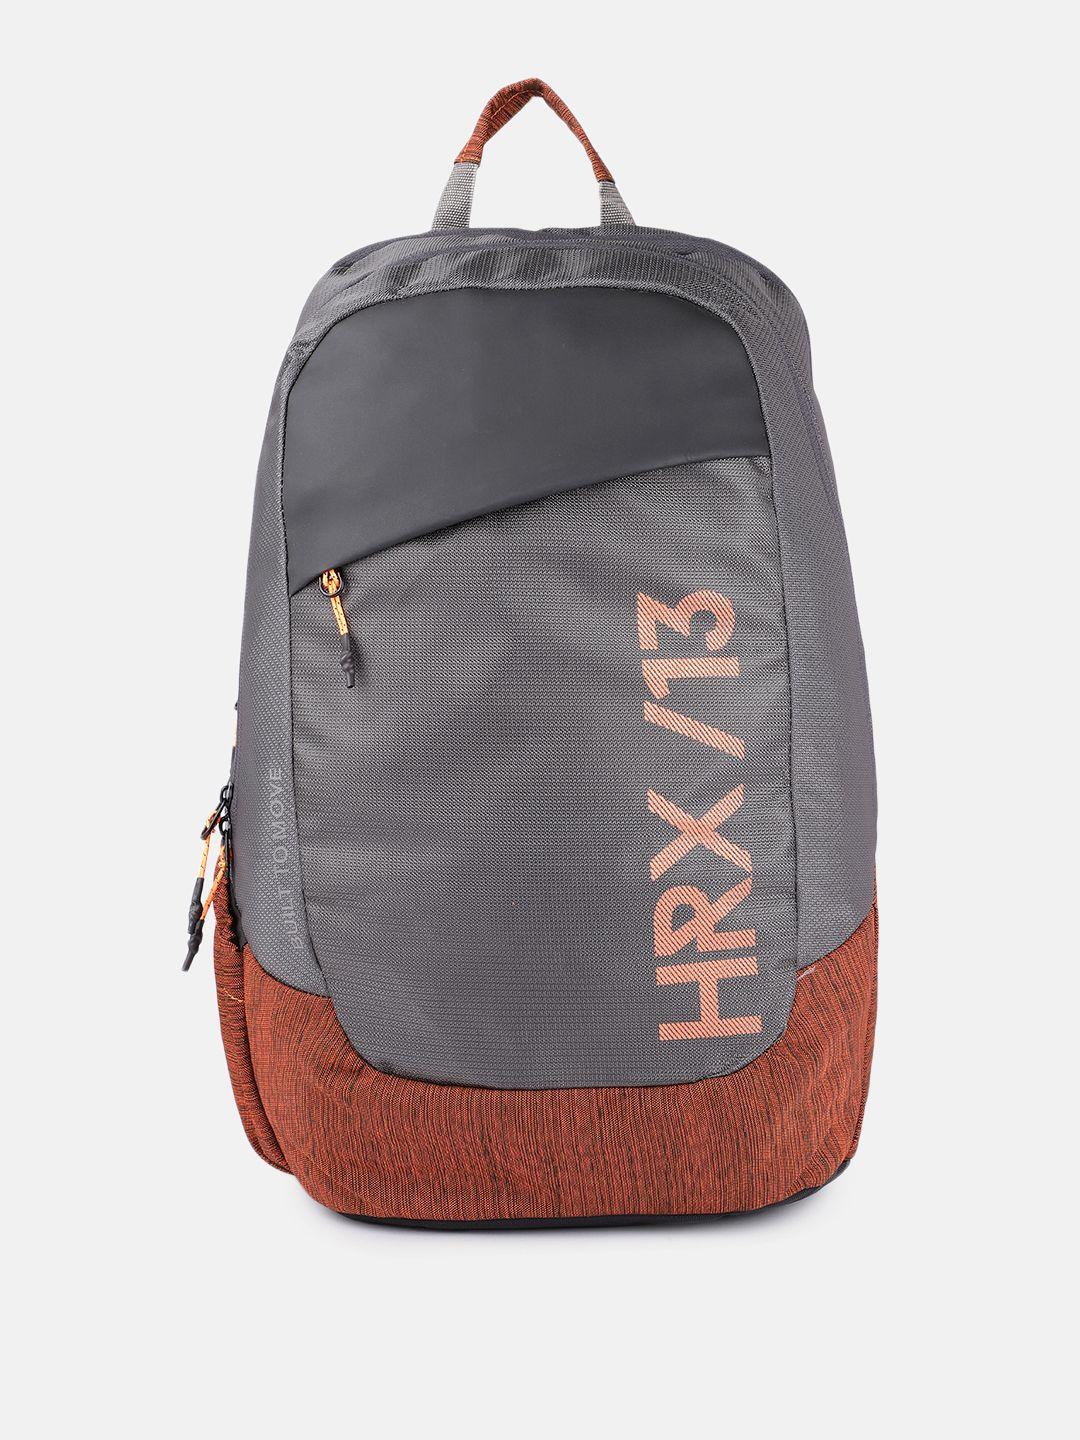 hrx by hrithik roshan unisex grey & orange brand logo printed colour blocked backpack